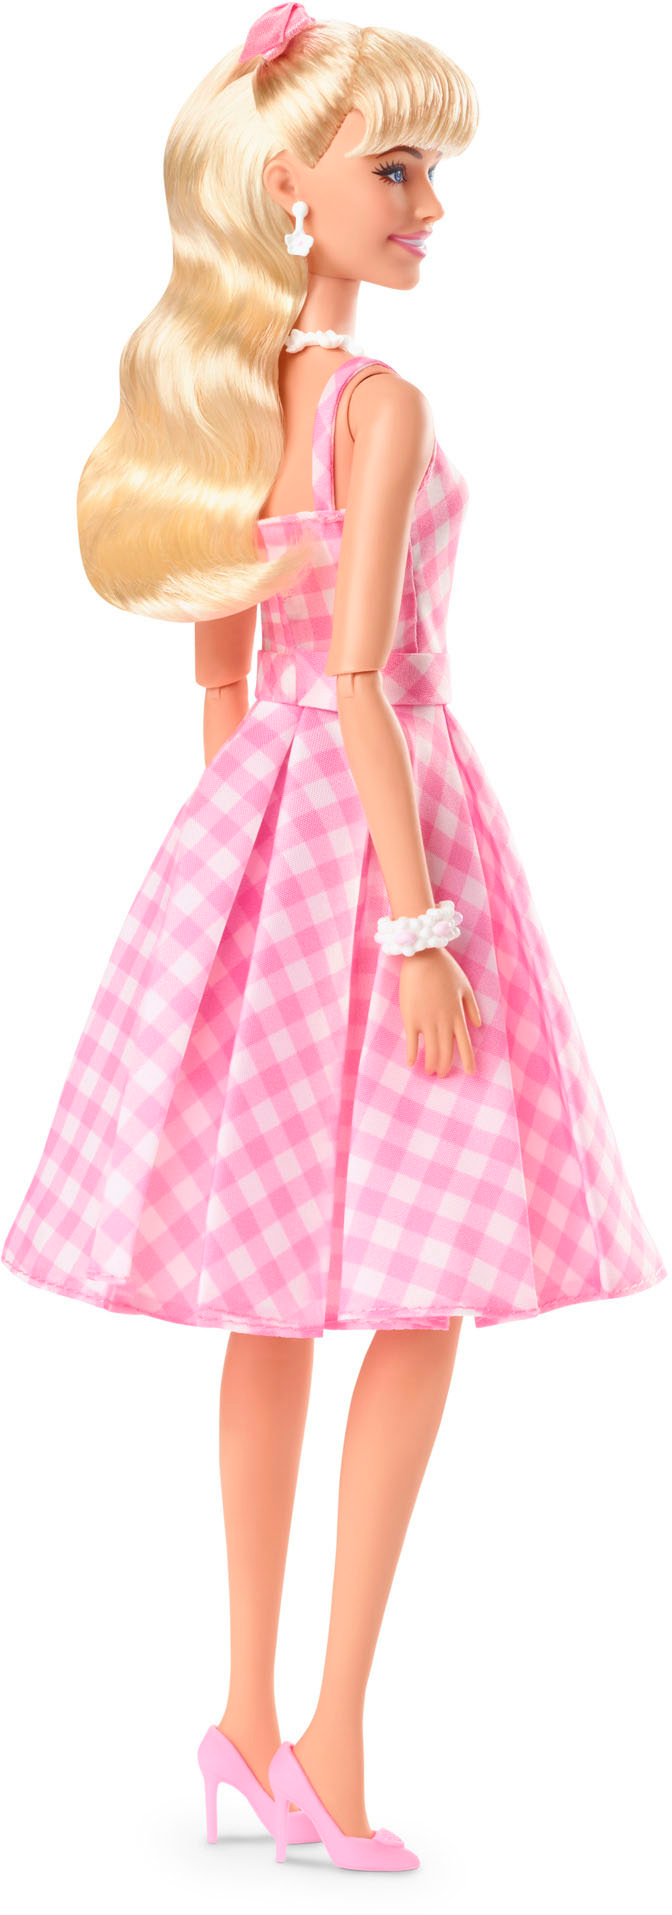 Barbie The Movie 11.5 Doll in Gingham Dress HPJ96 - Best Buy